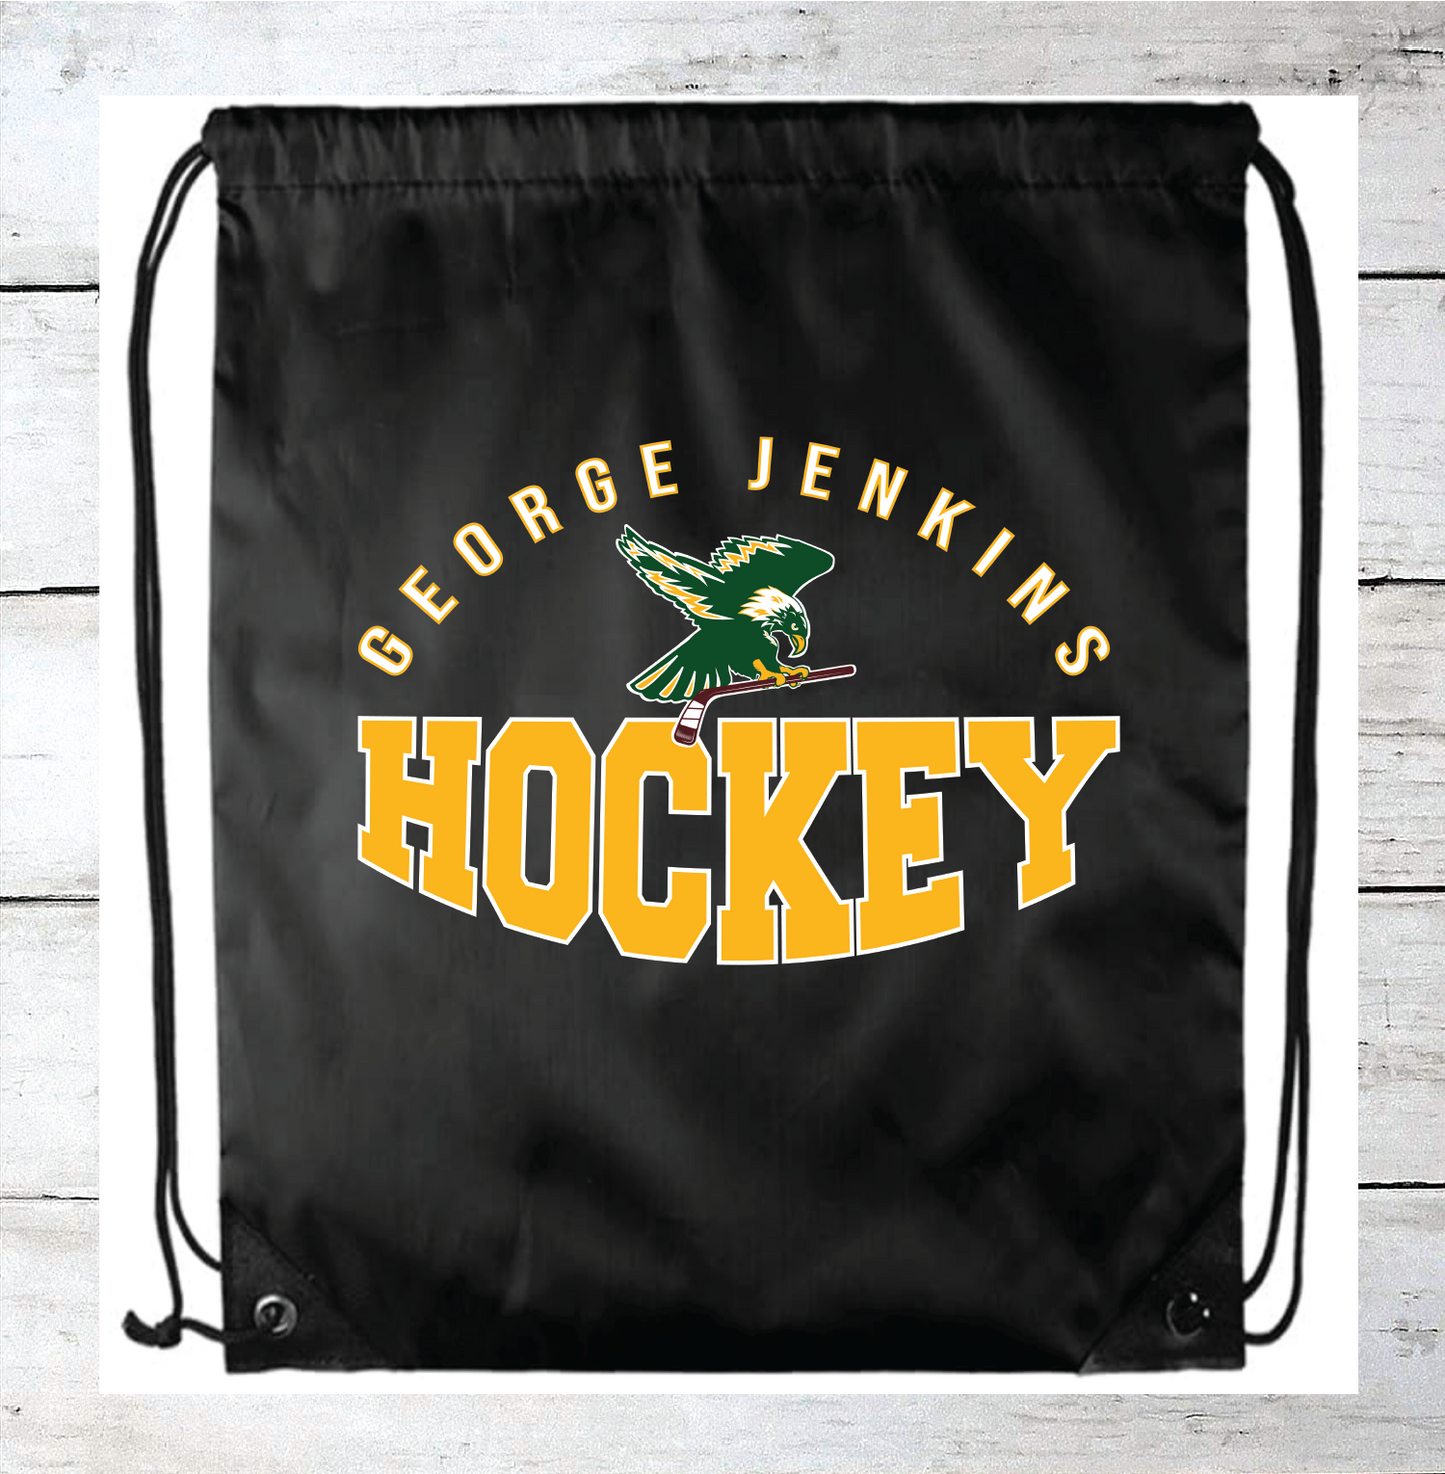 George Jenkins Hockey Drawstring Bag